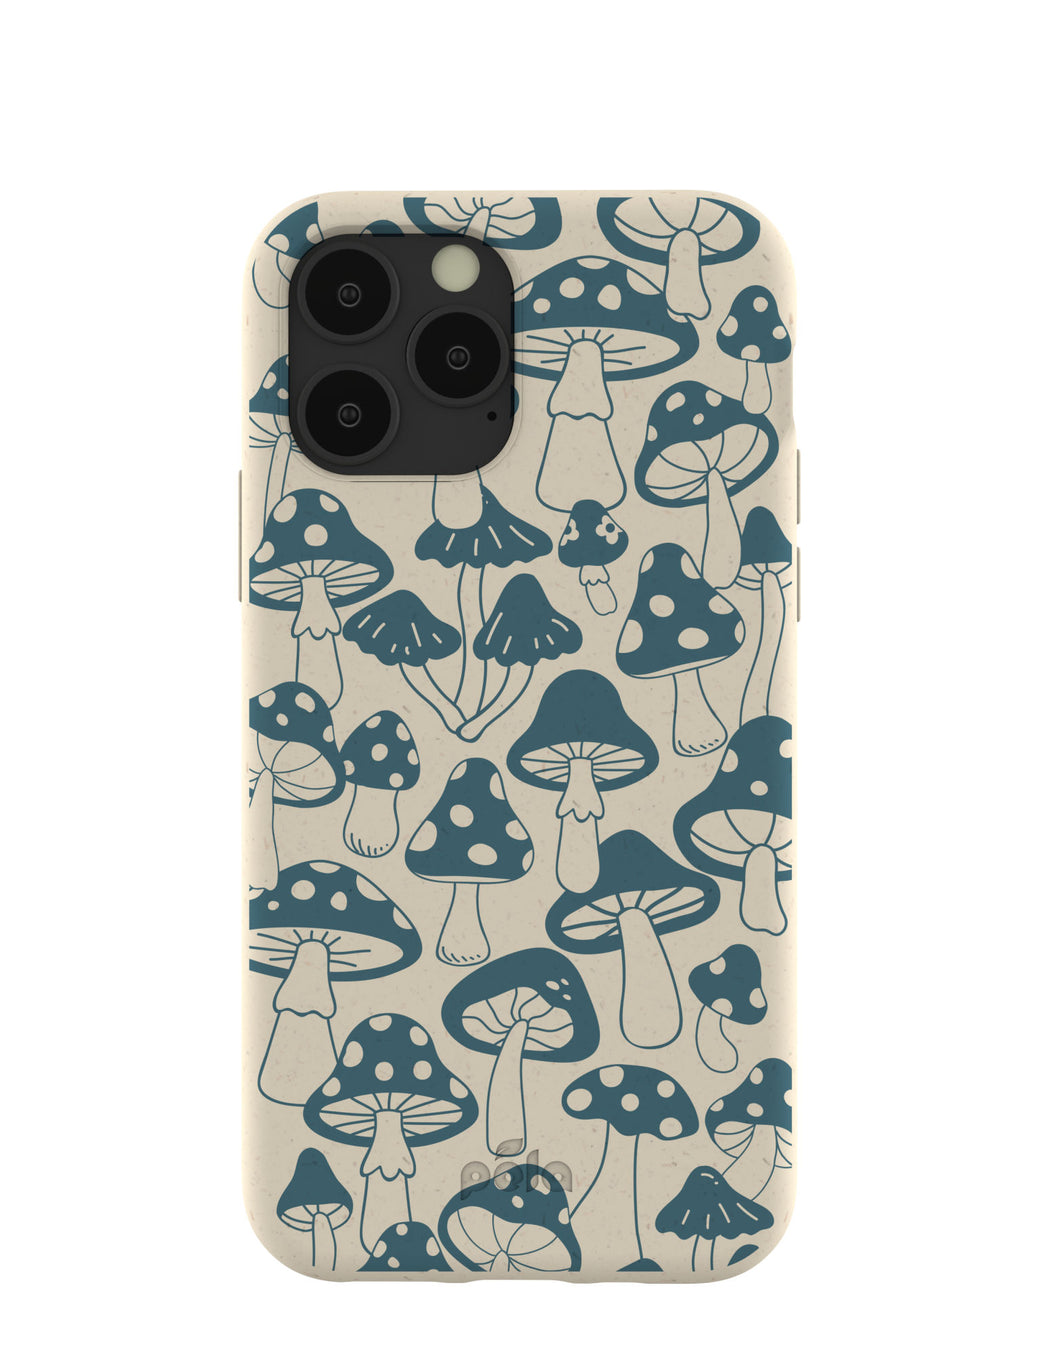 London Fog Mushroom power iPhone 11 Pro Case